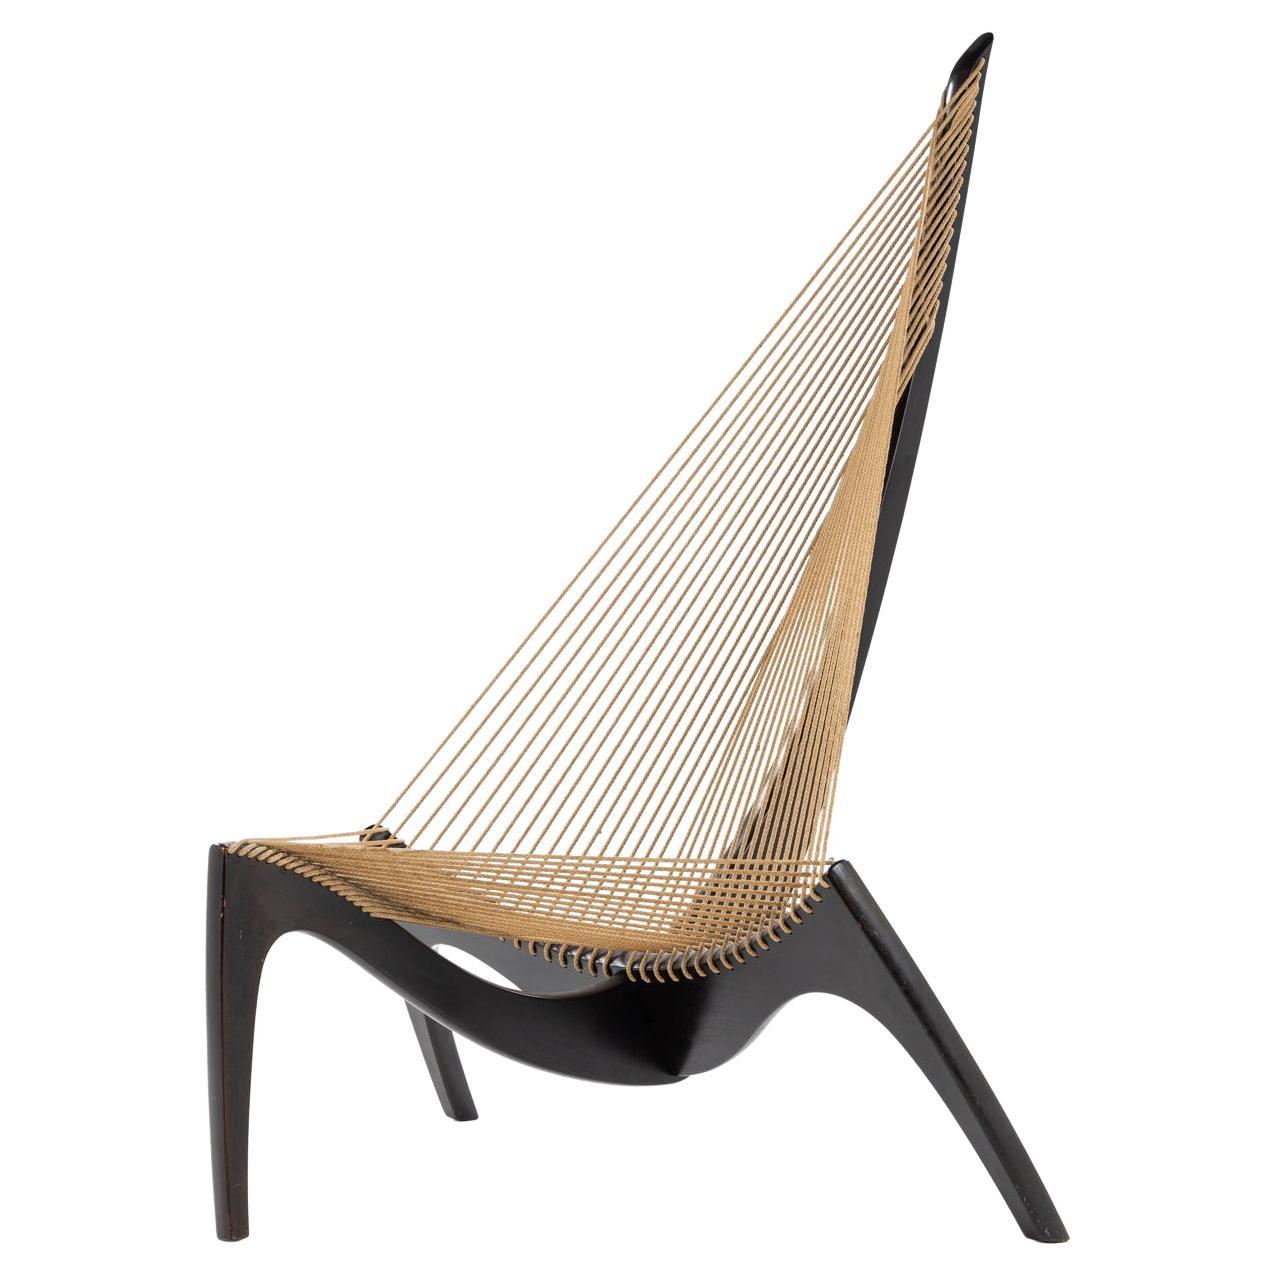 Harp chair by Jørgen Høvelskov